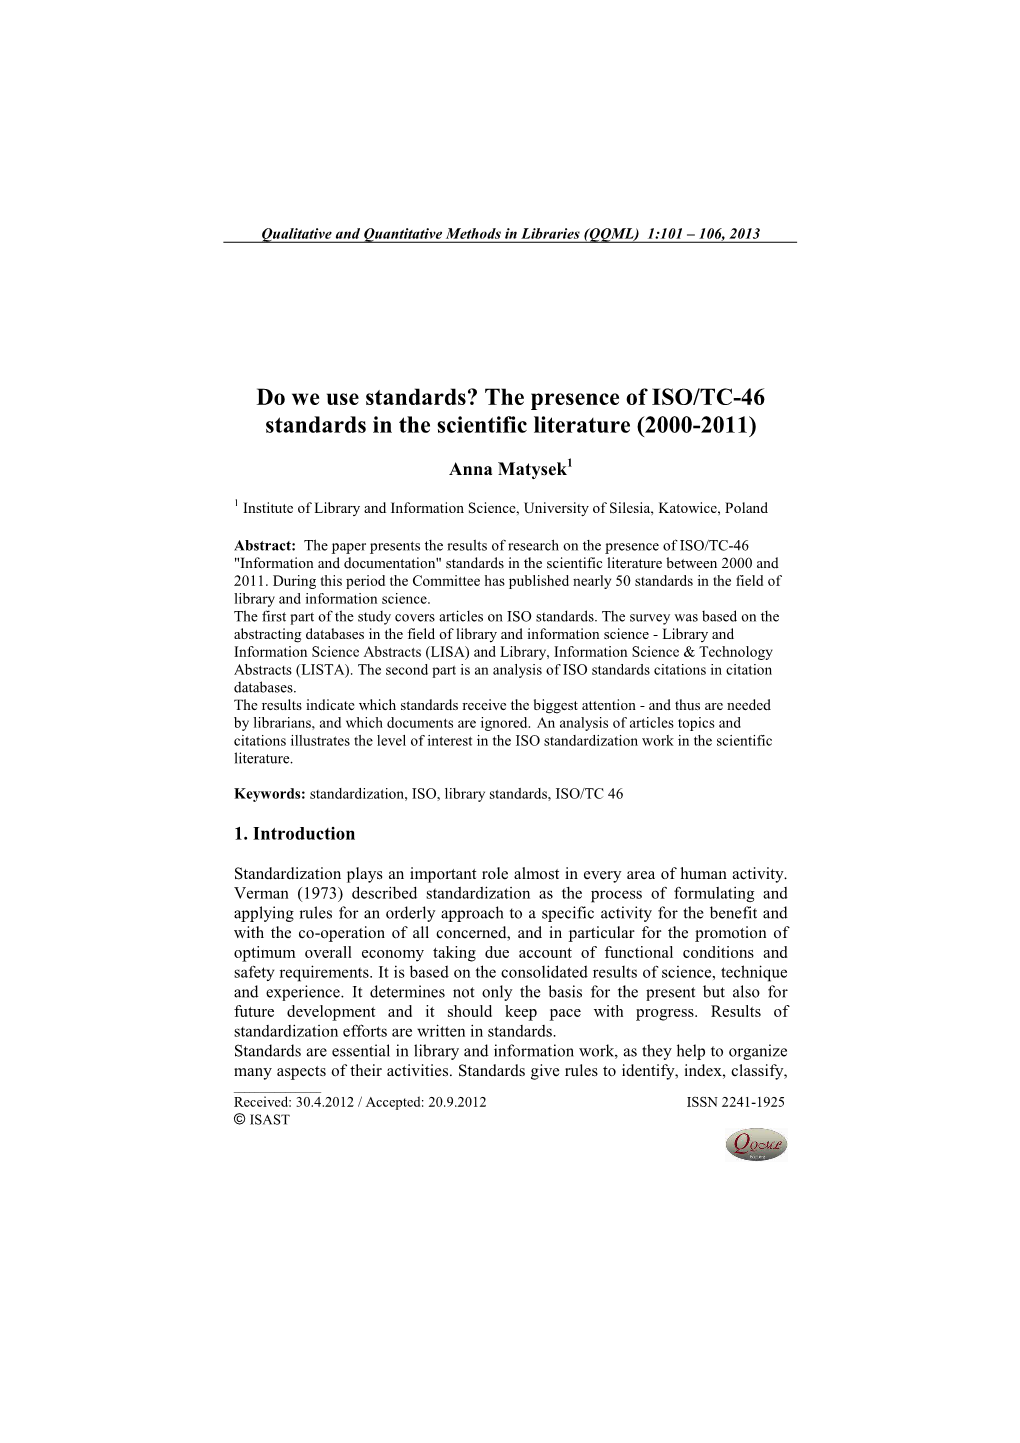 The Presence of ISO/TC-46 Standards in the Scientific Literature (2000-2011)